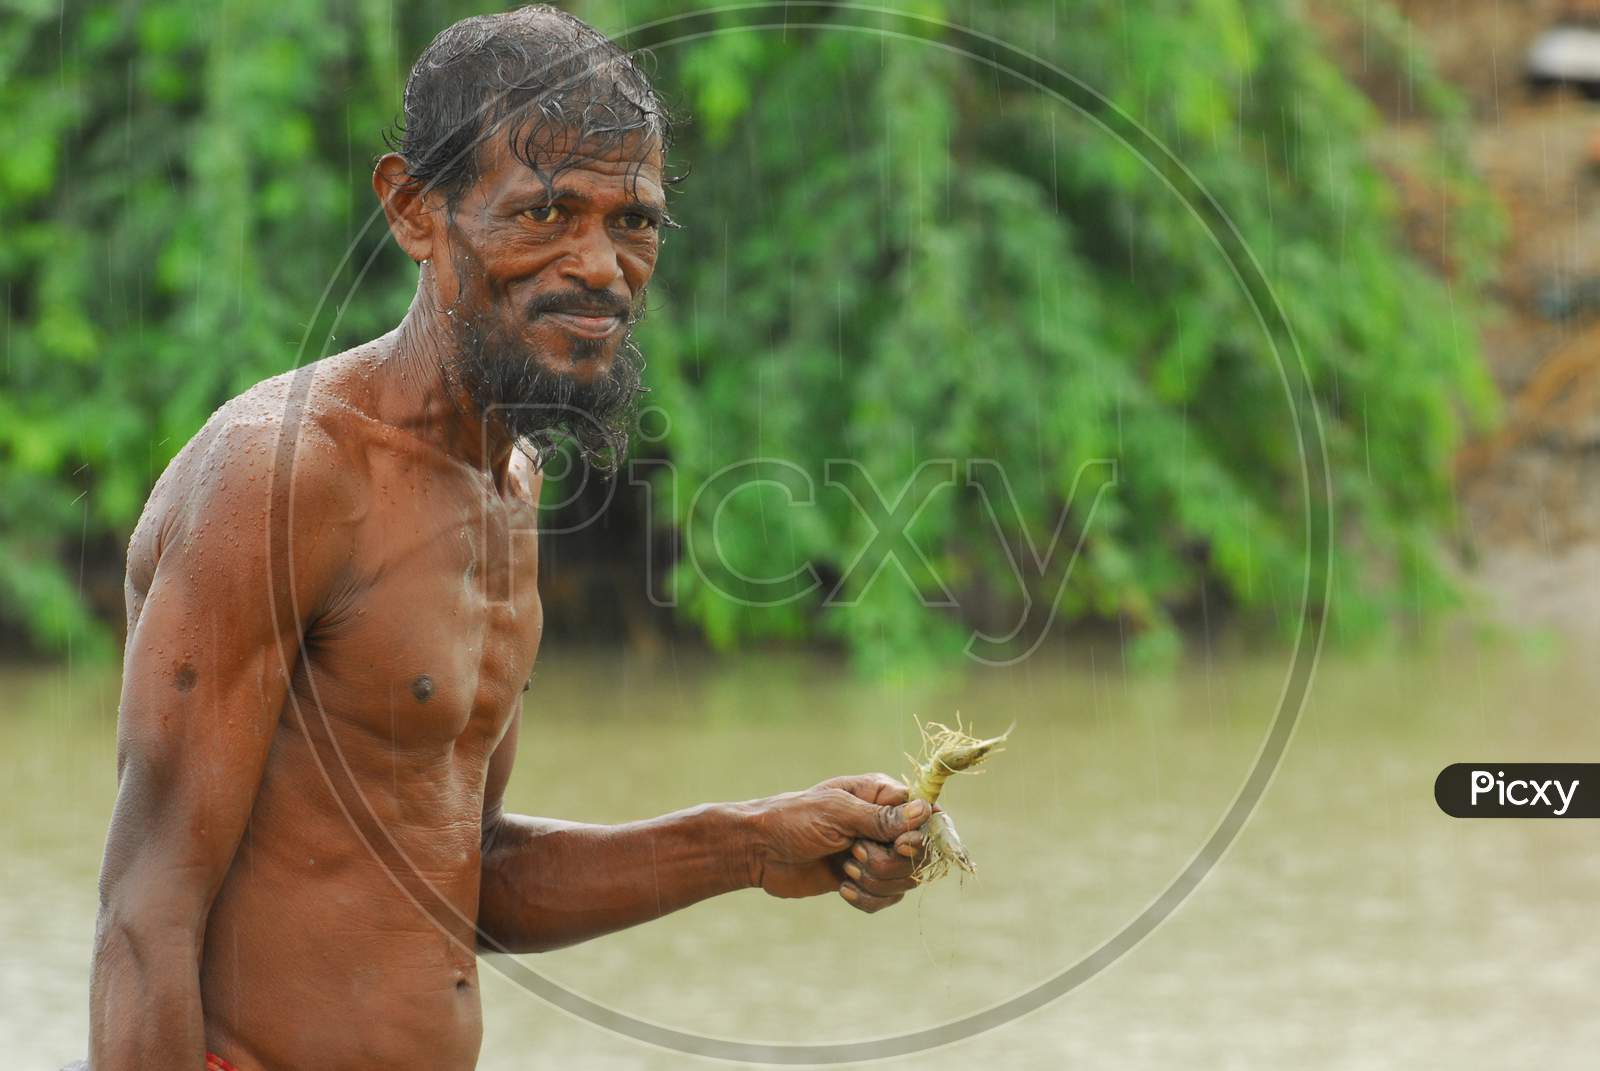 Indian fisherman smiling holding a shrimp